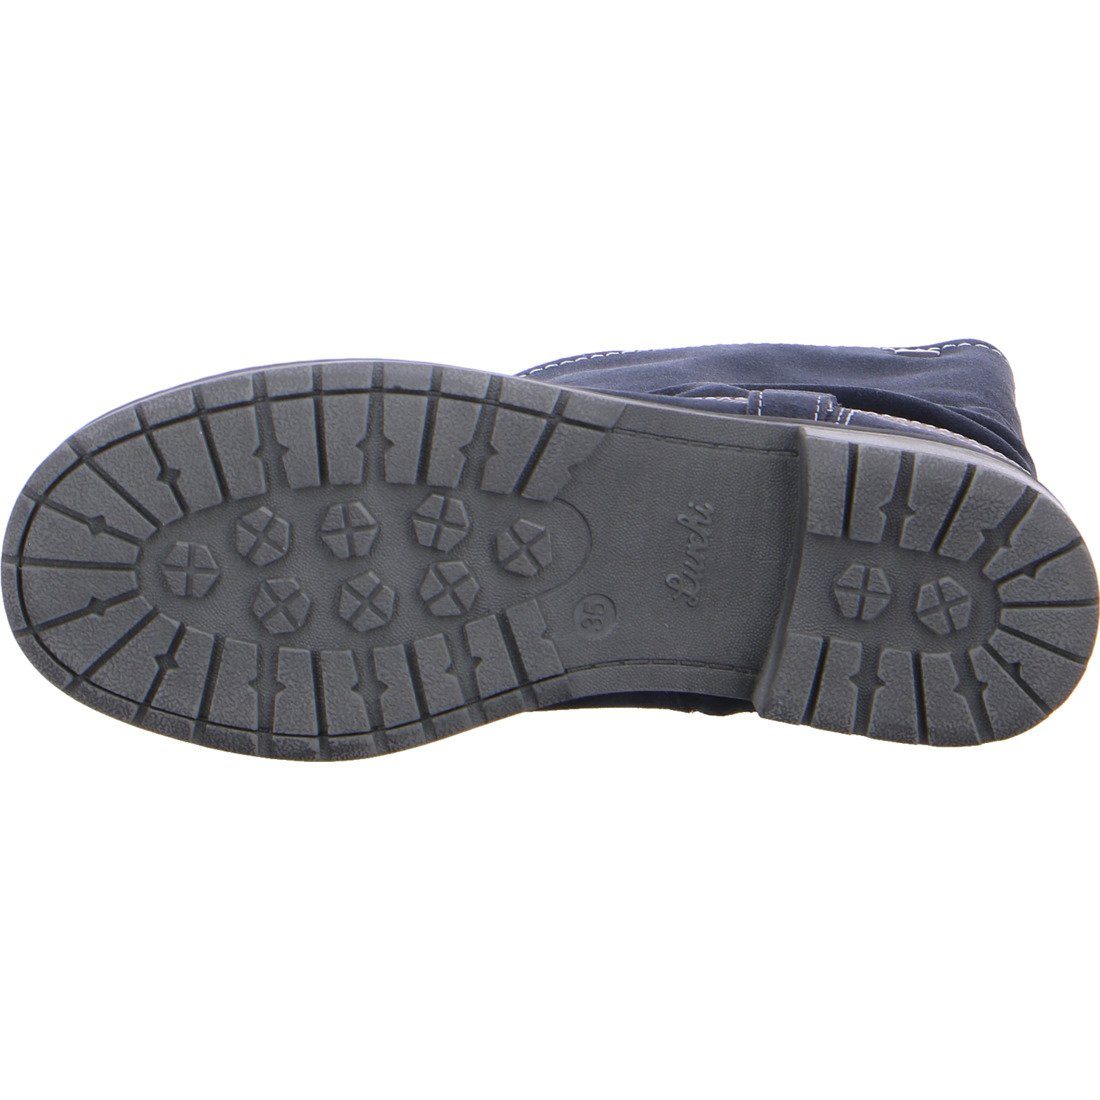 Stiefel Stiefel blau Lurchi Schuhe, 044032 - Lia-Tex Rauleder Lurchi